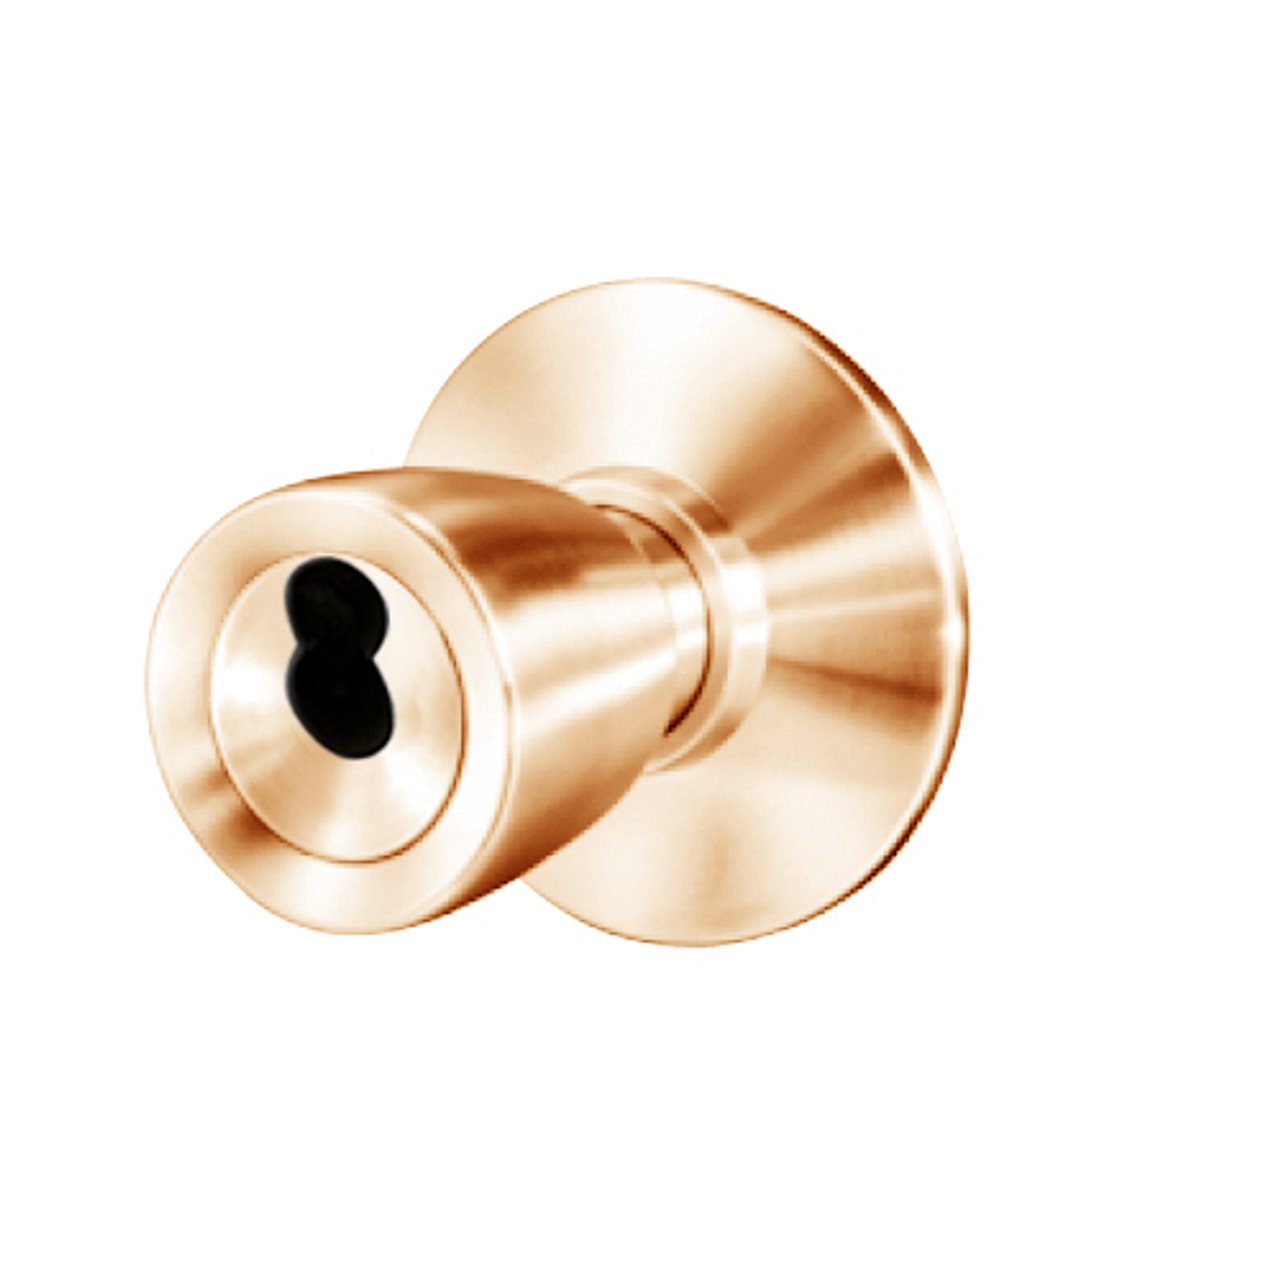 8K47W6DSTK612 Best 8K Series Institutional Heavy Duty Cylindrical Knob Locks with Tulip Style in Satin Bronze